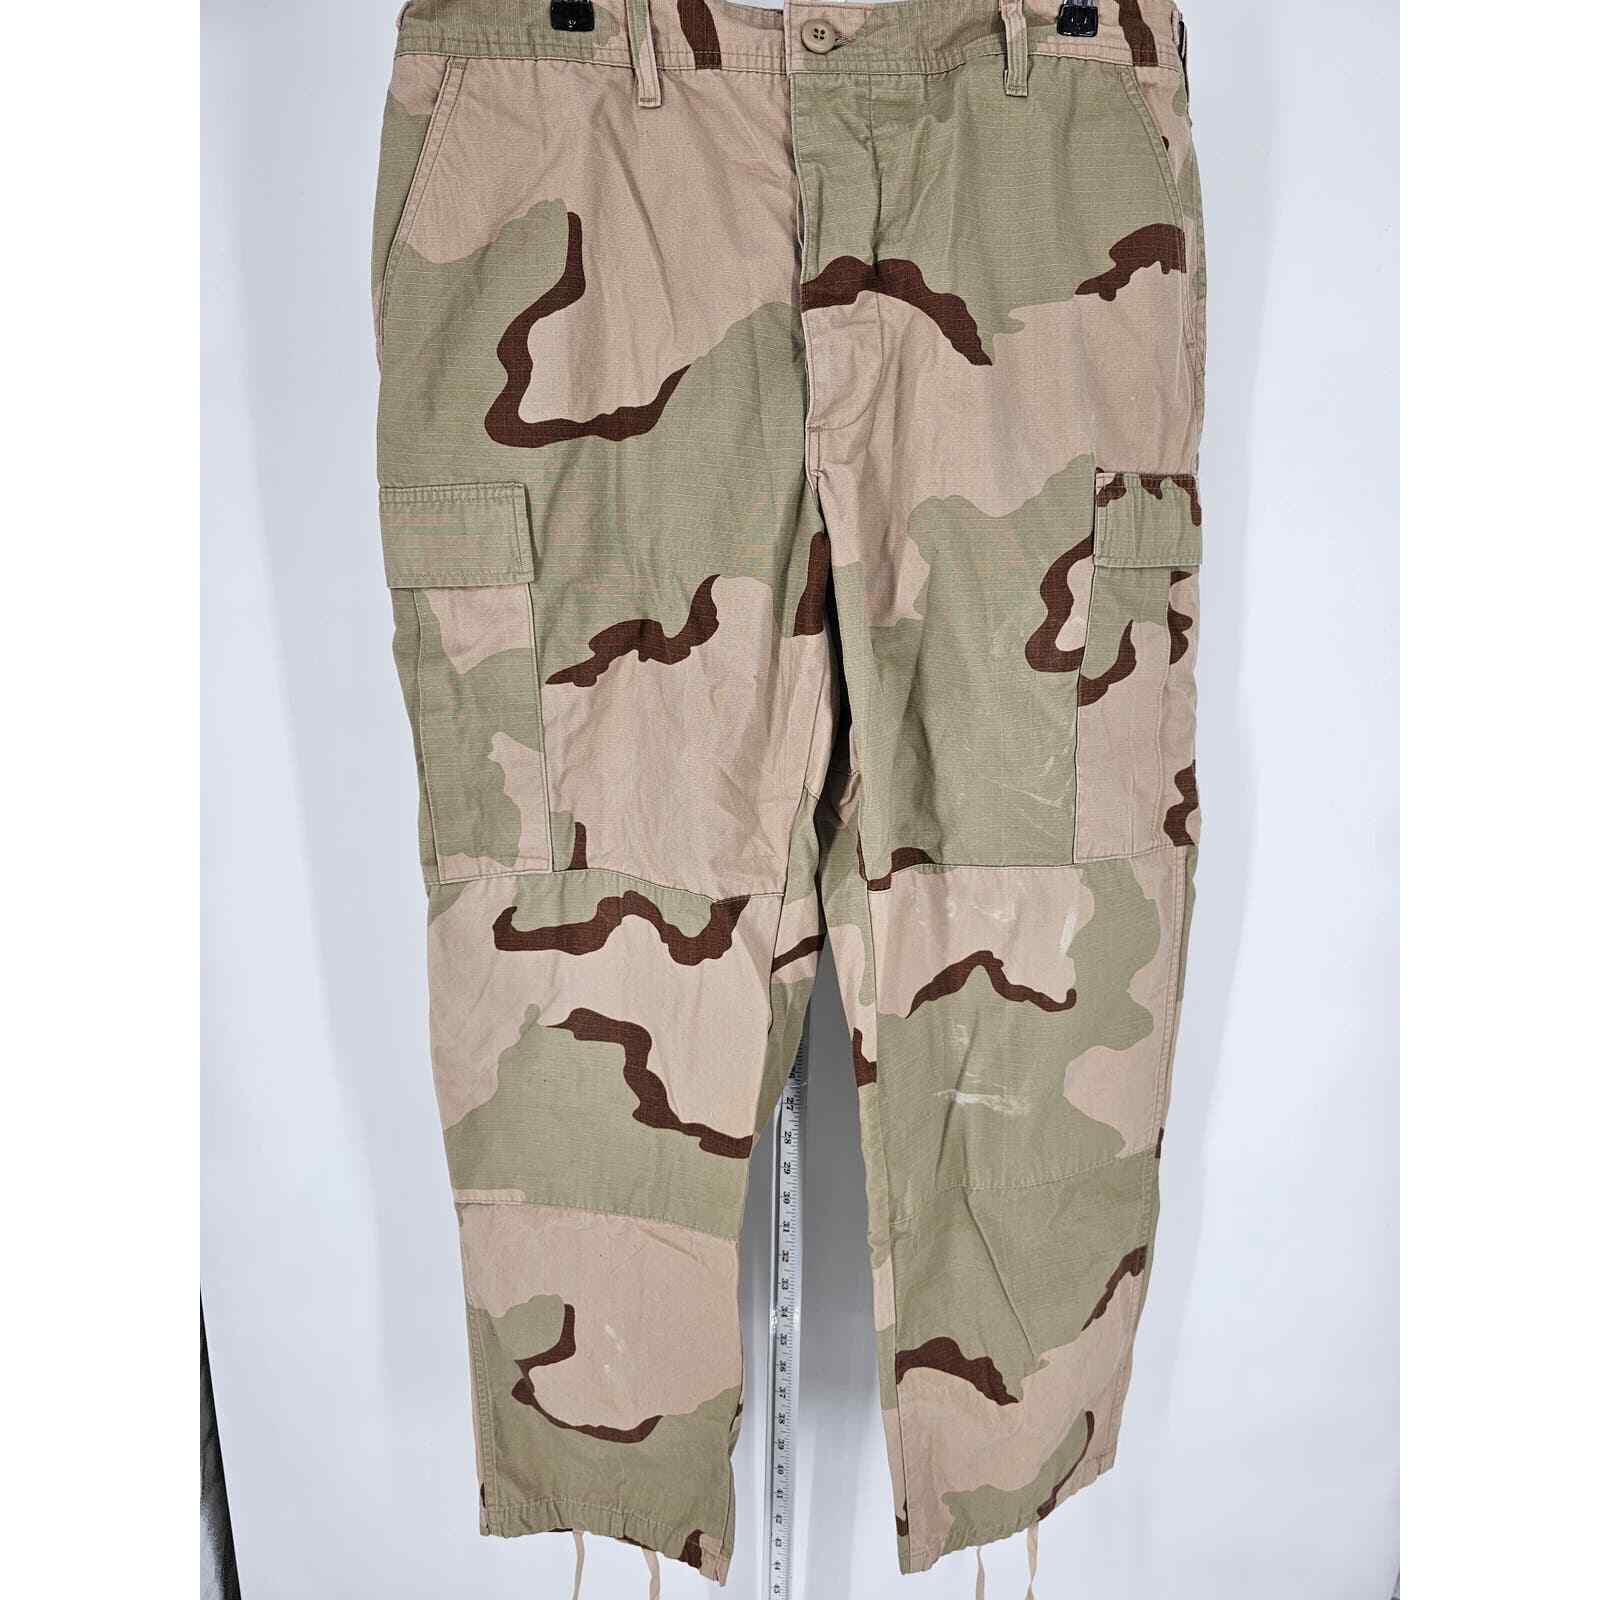 Vintage 1990s Army Desert Camouflage Cargo Pants Trousers Sz L